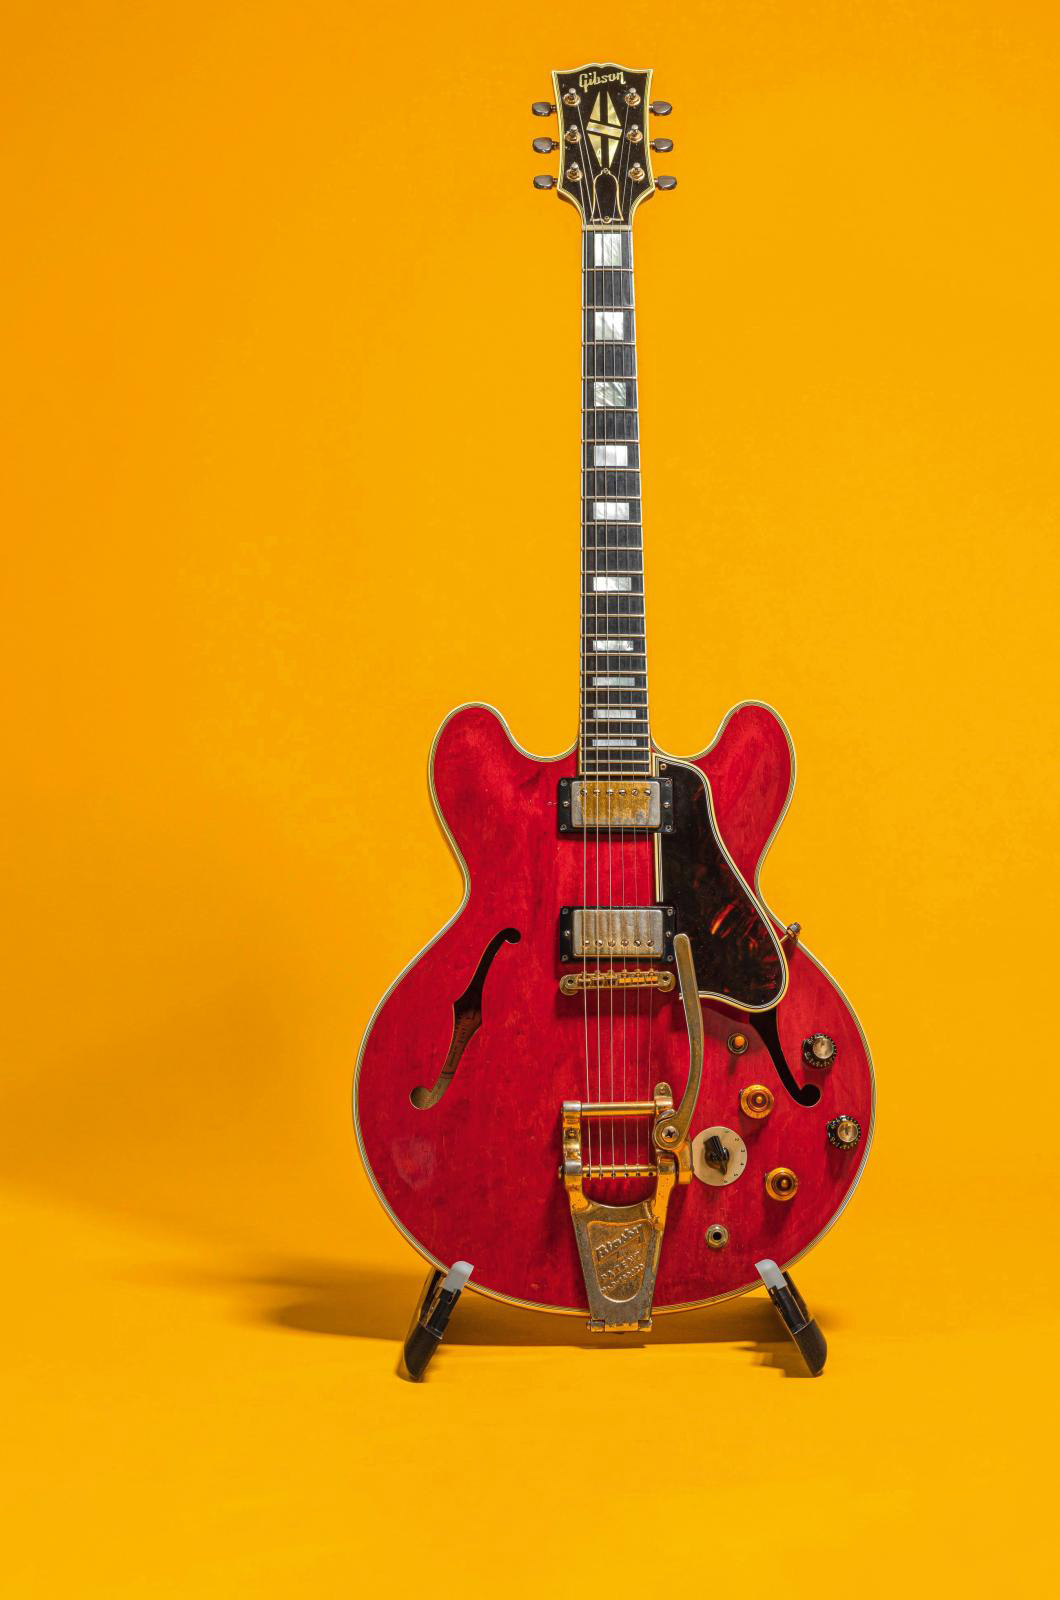 Noel Gallagher’s Last Gibson ES-355